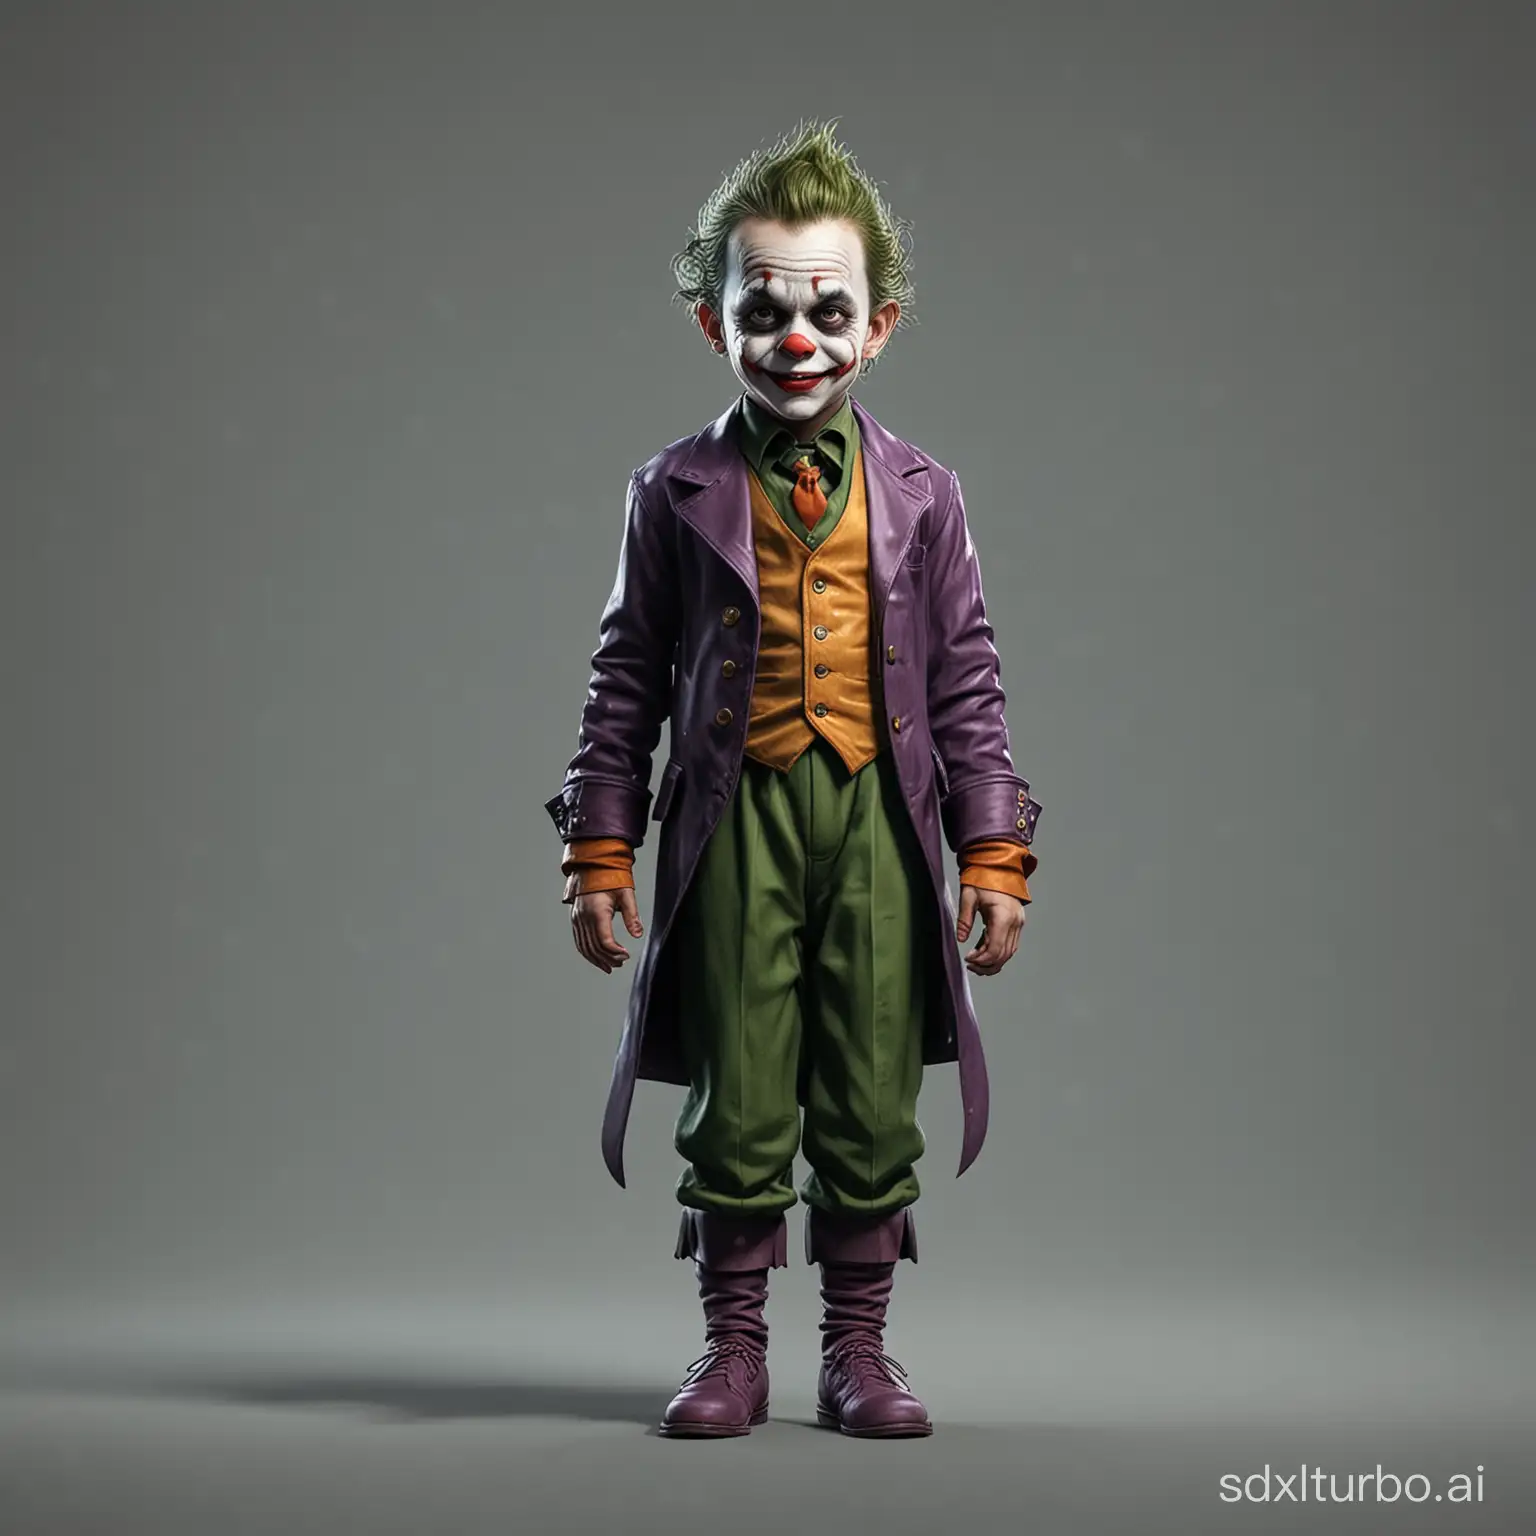 Playful-Little-Joker-Whimsical-Game-Character-Standing-Tall